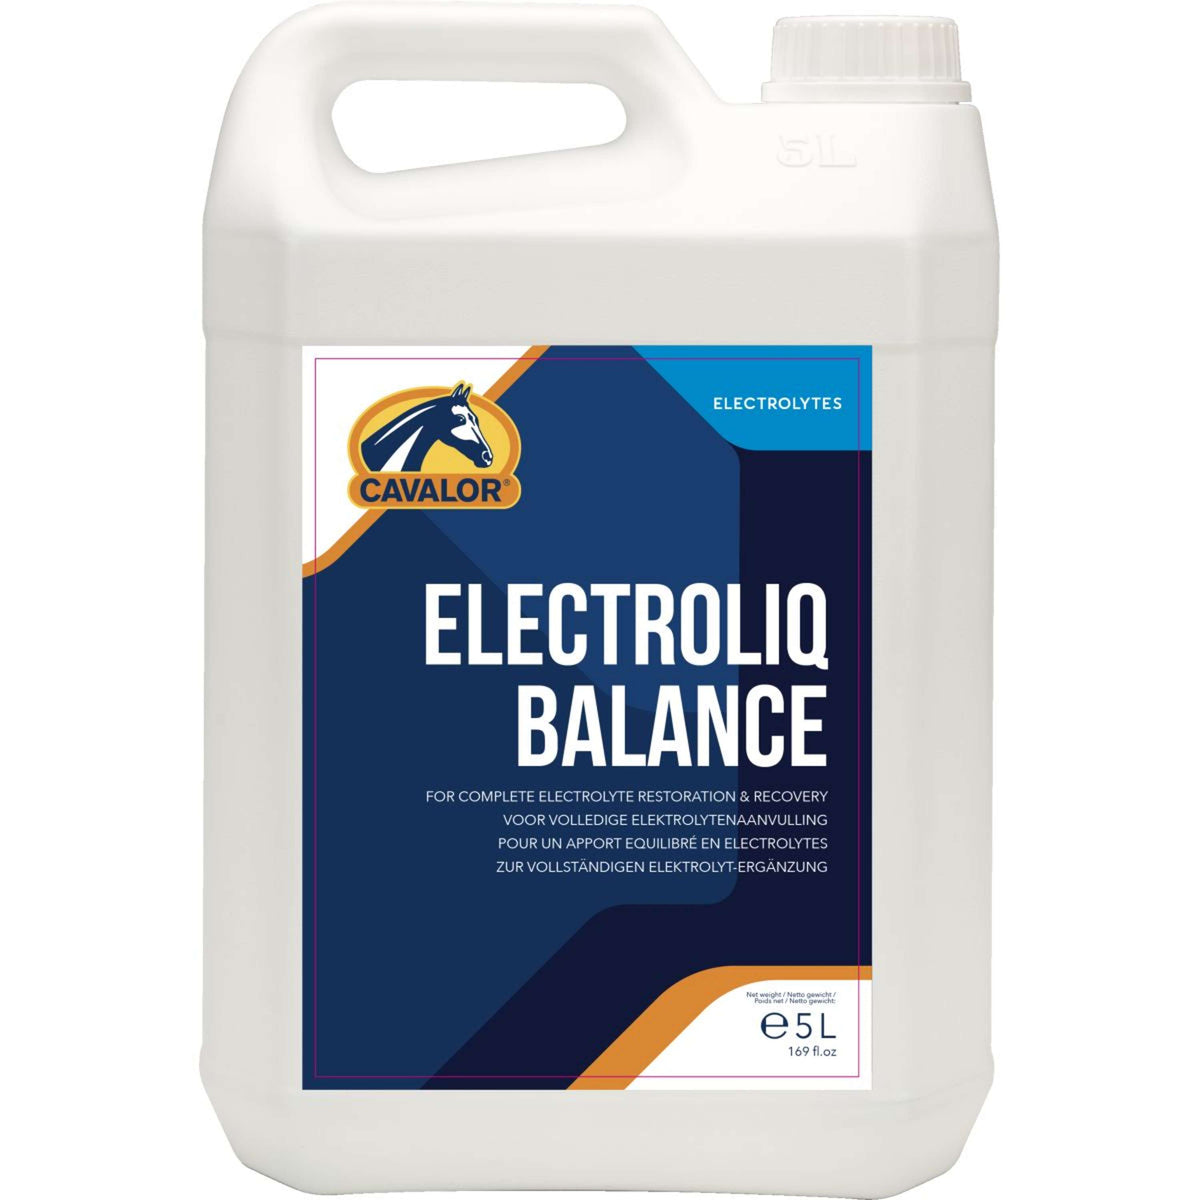 Cavalor Elektrolyte Electroliq Balance